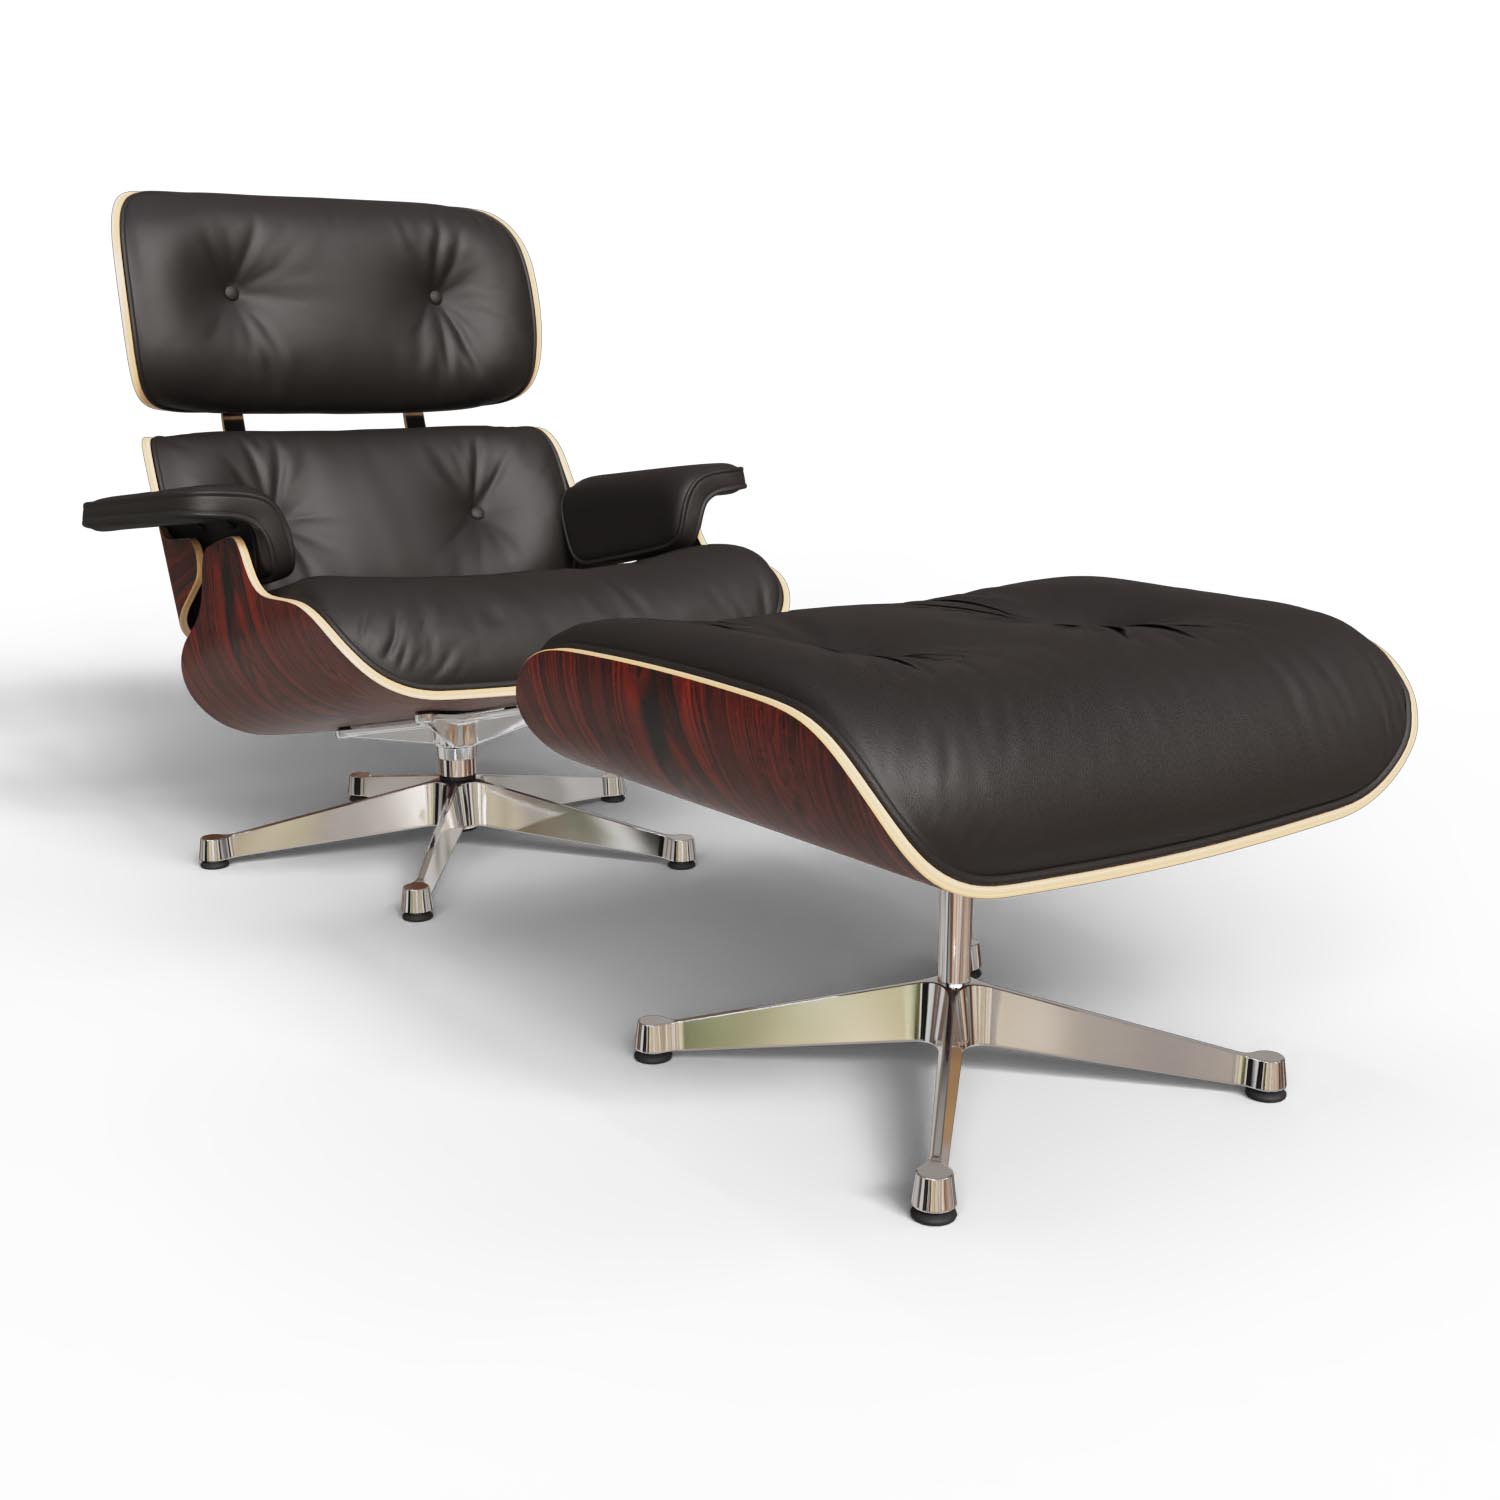 Lounge Chair and Ottoman 41212200 Santos Palisander Leder Premium Farbe Chocolate Gestell Aluminium poliert